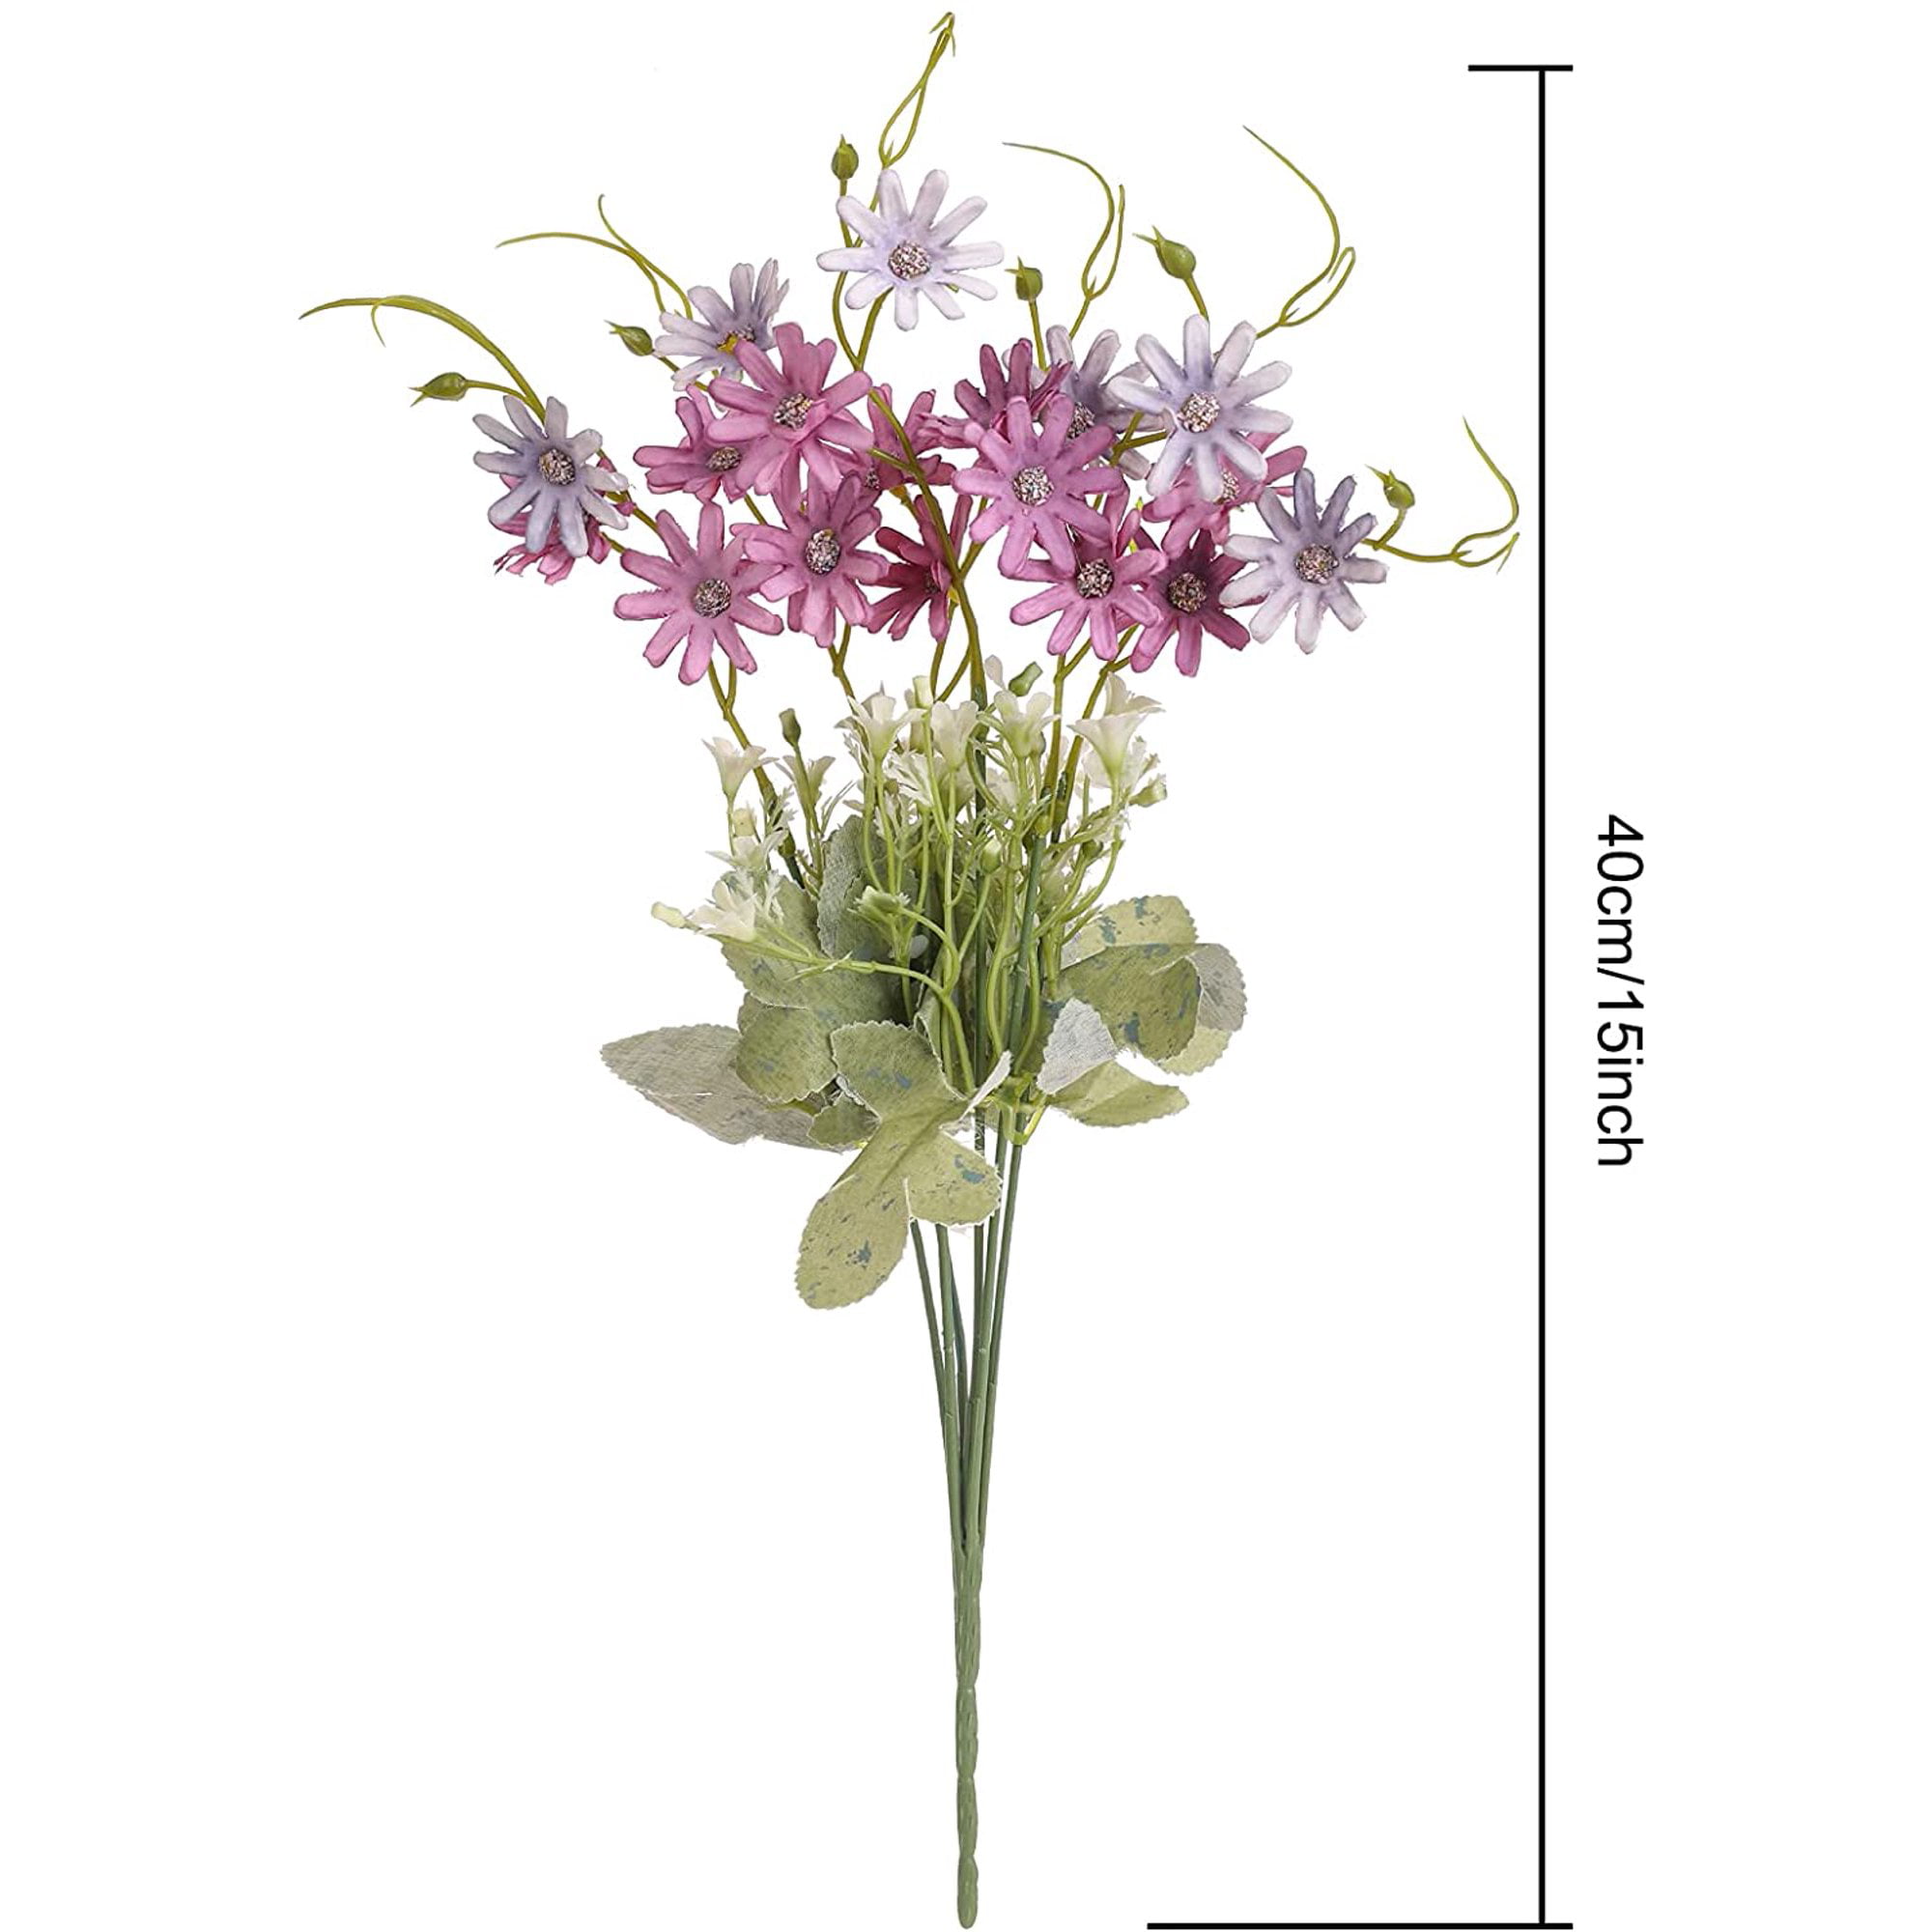 Nankers Daisies Flowers Artificial Wildflowers 6 Bundles Fake Silk Daisy Greener